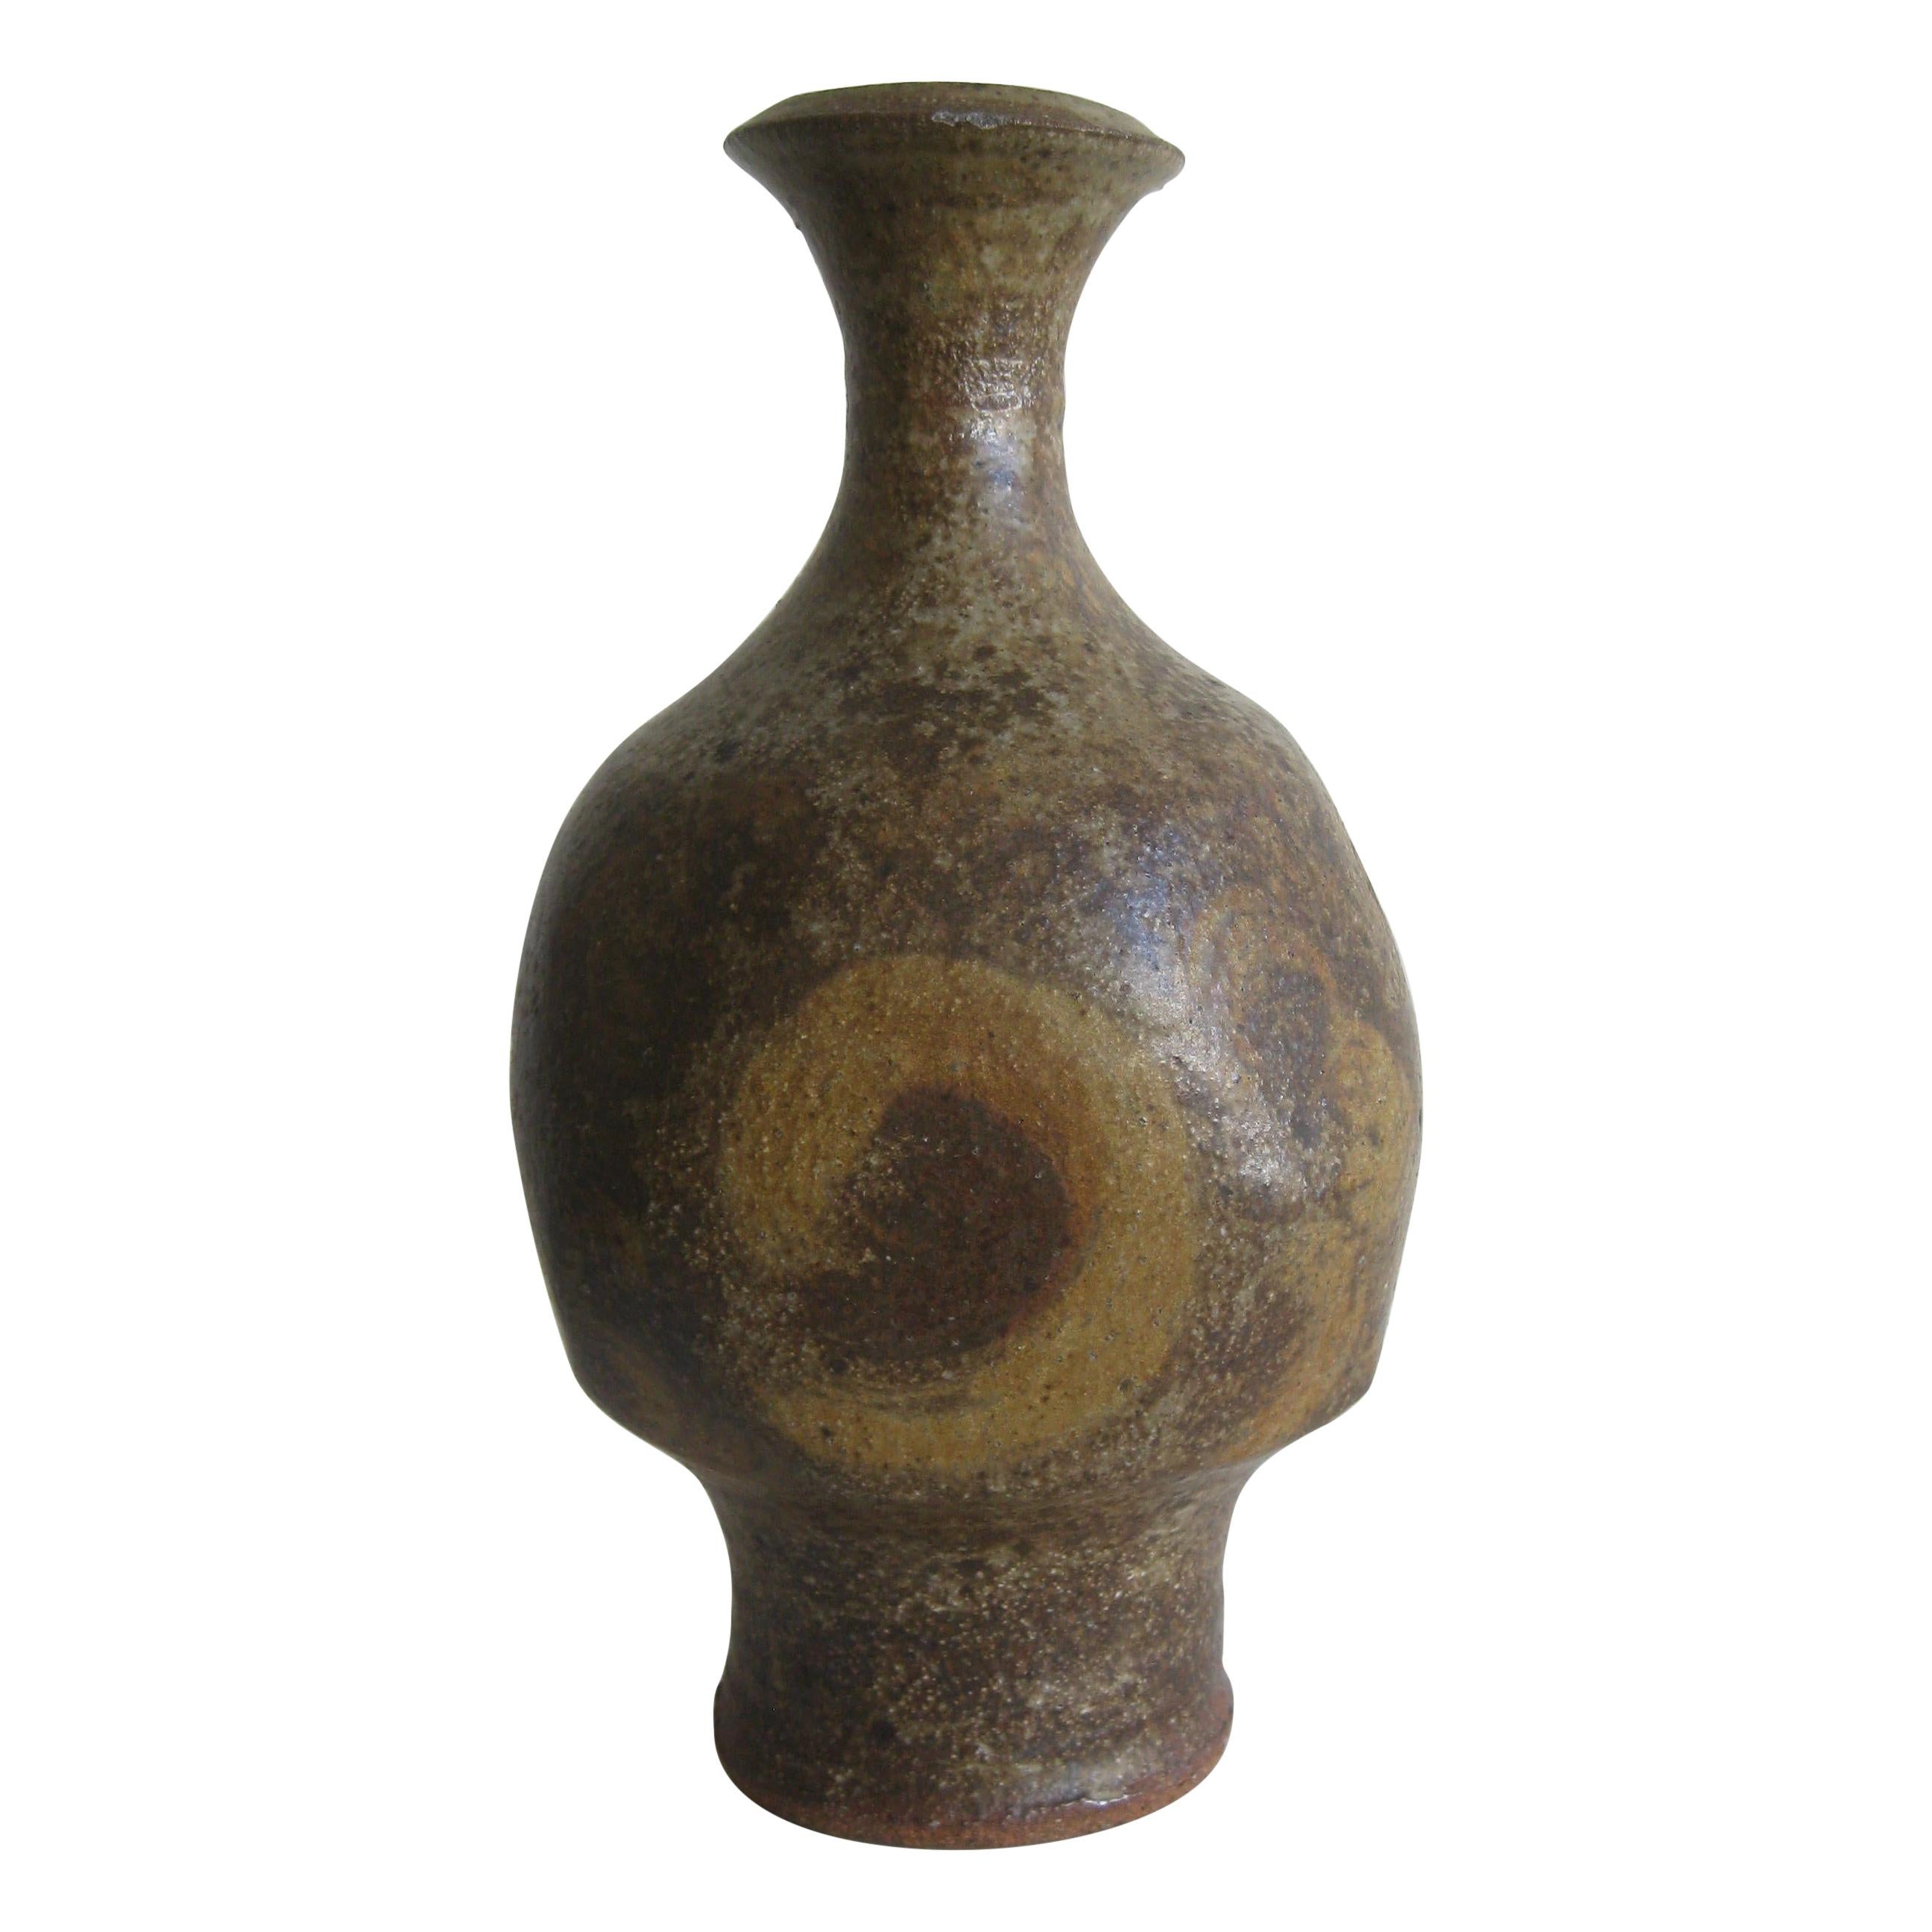 Robert Fournier British Studio Art Pottery Modernist Stoneware Vase Vessel Big For Sale